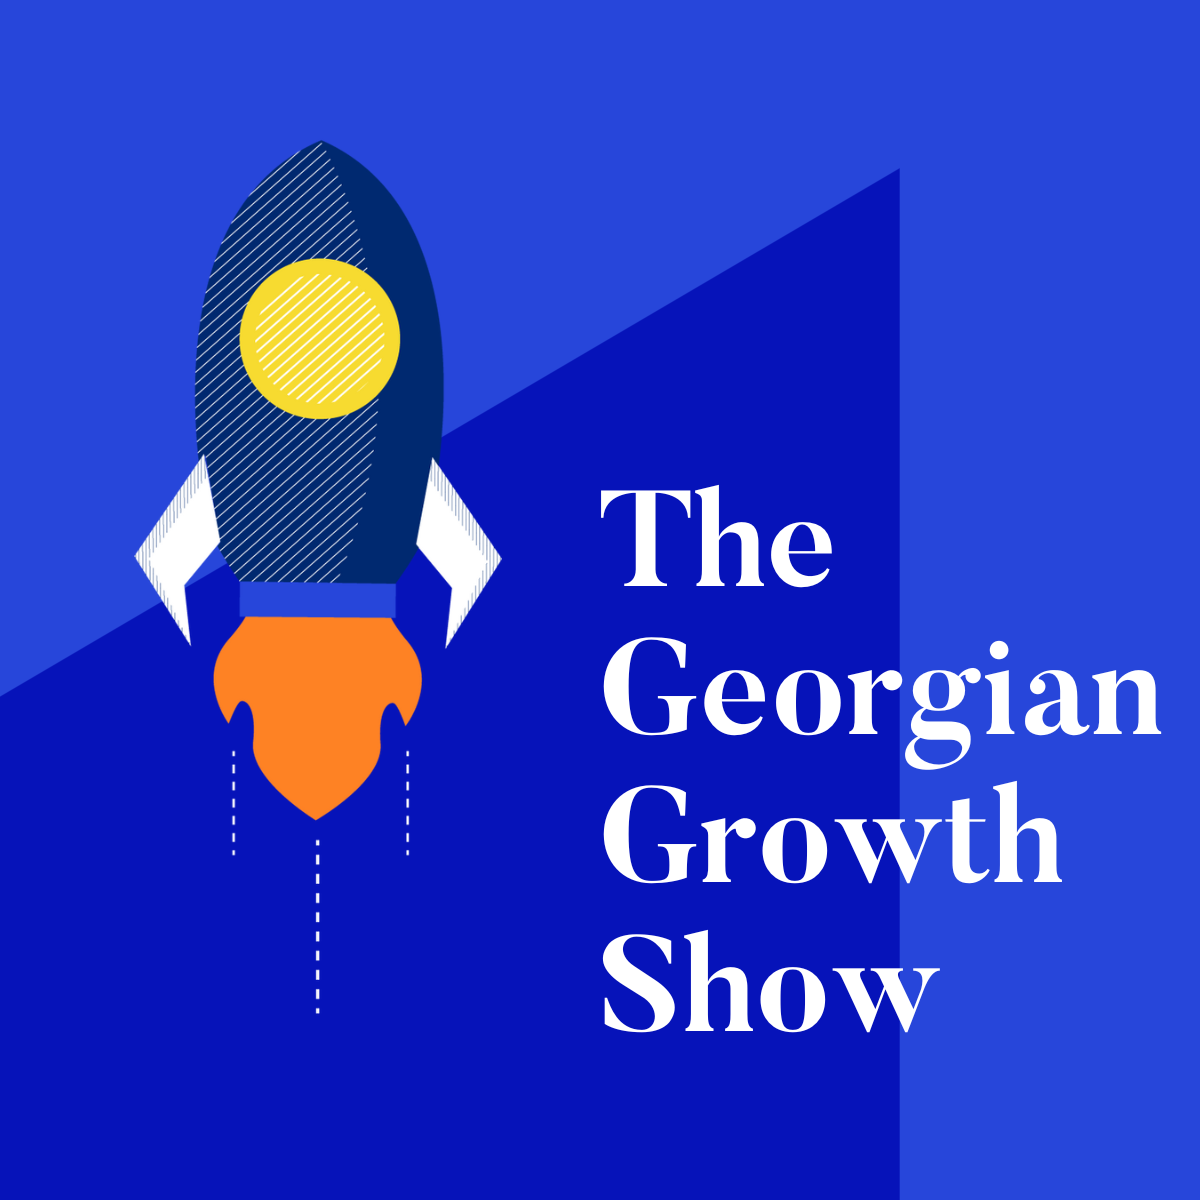 The Georgian Growth Show